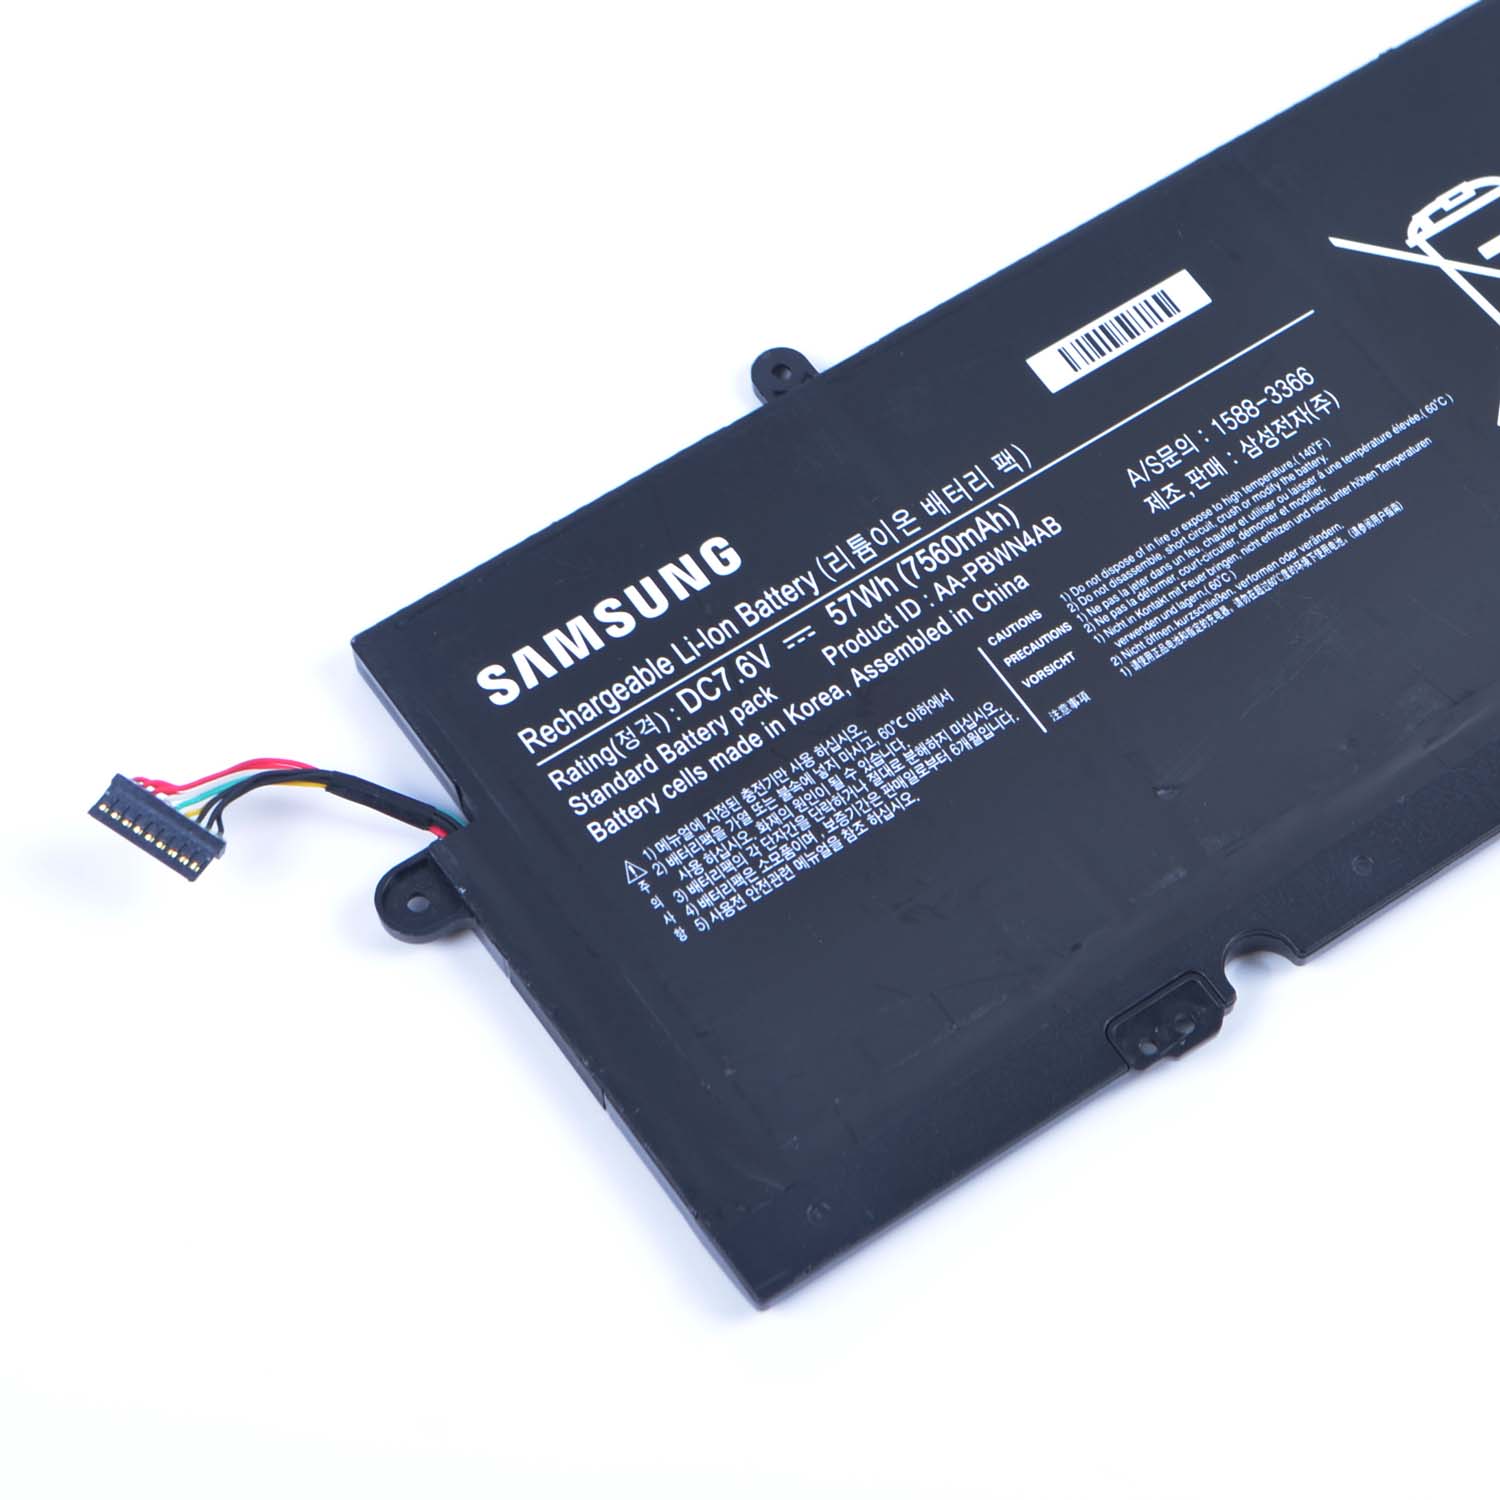 Samsung Samsung 530U4E battery